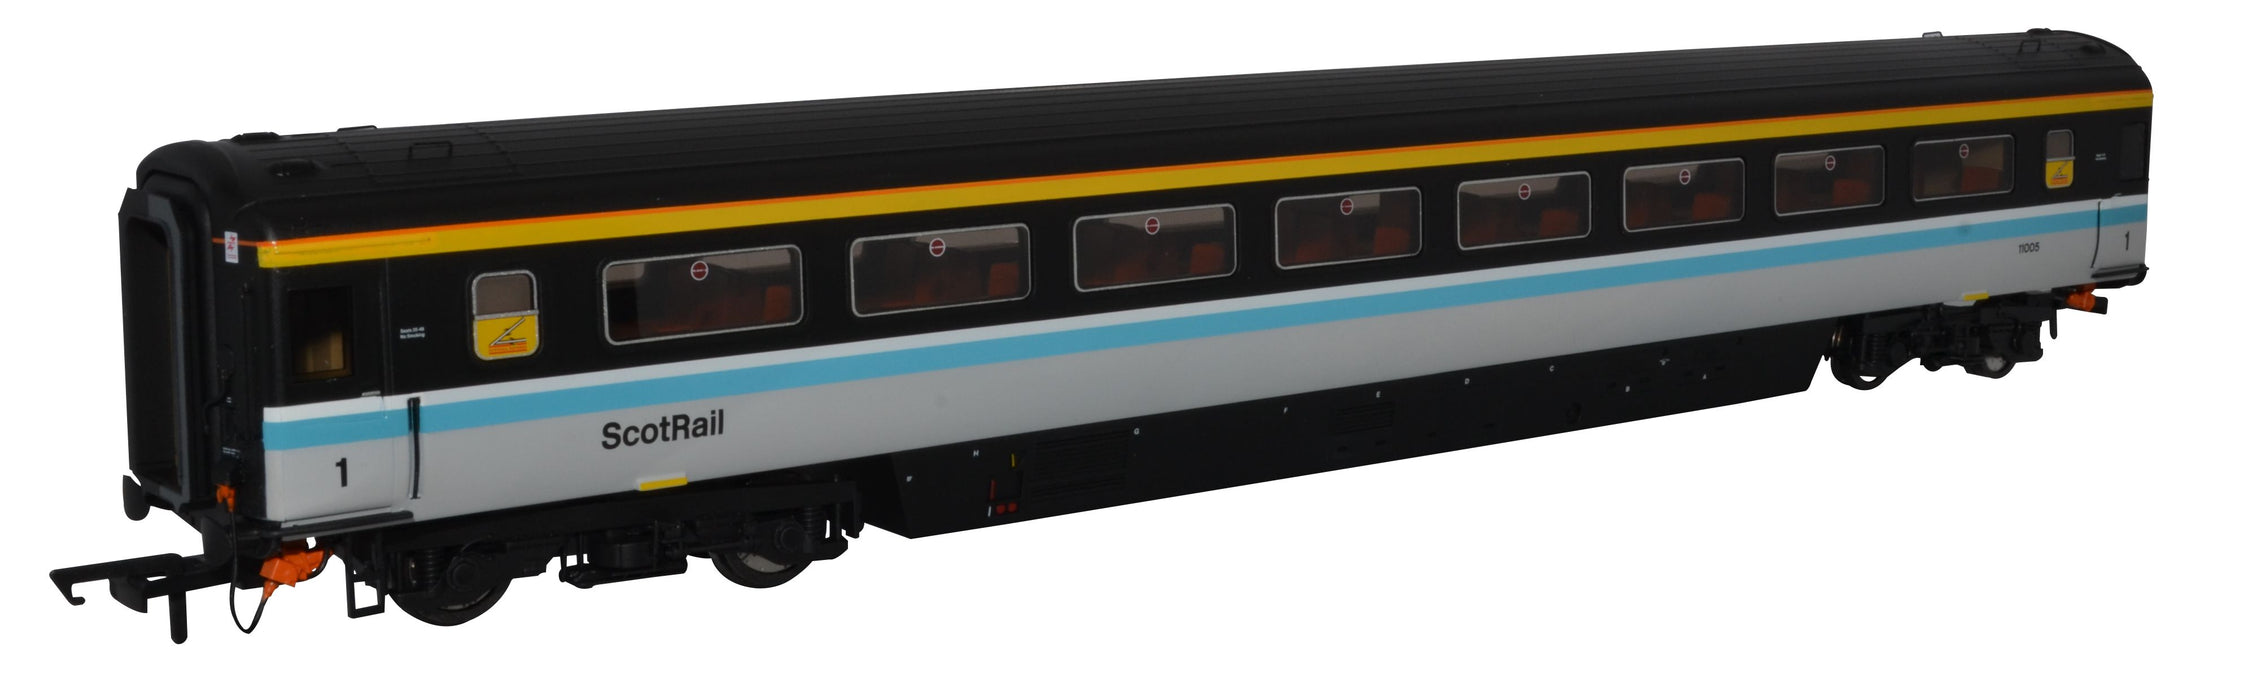 Oxford Rail MK3A-FO Scotrail Sc11005